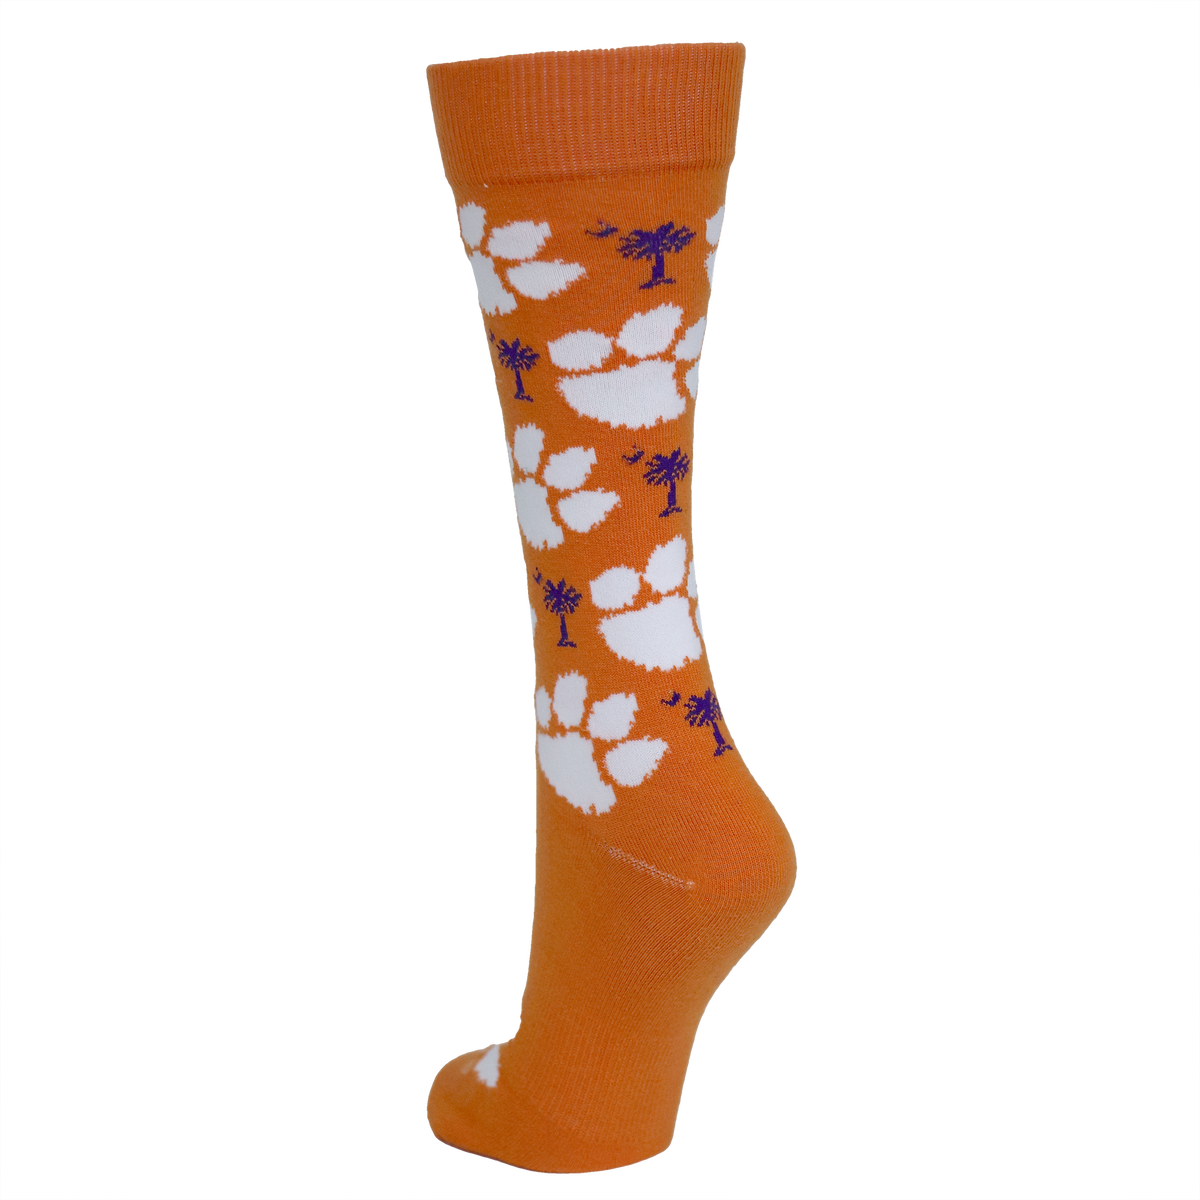 Clemson Orange Socks with White Paw and Palmetto